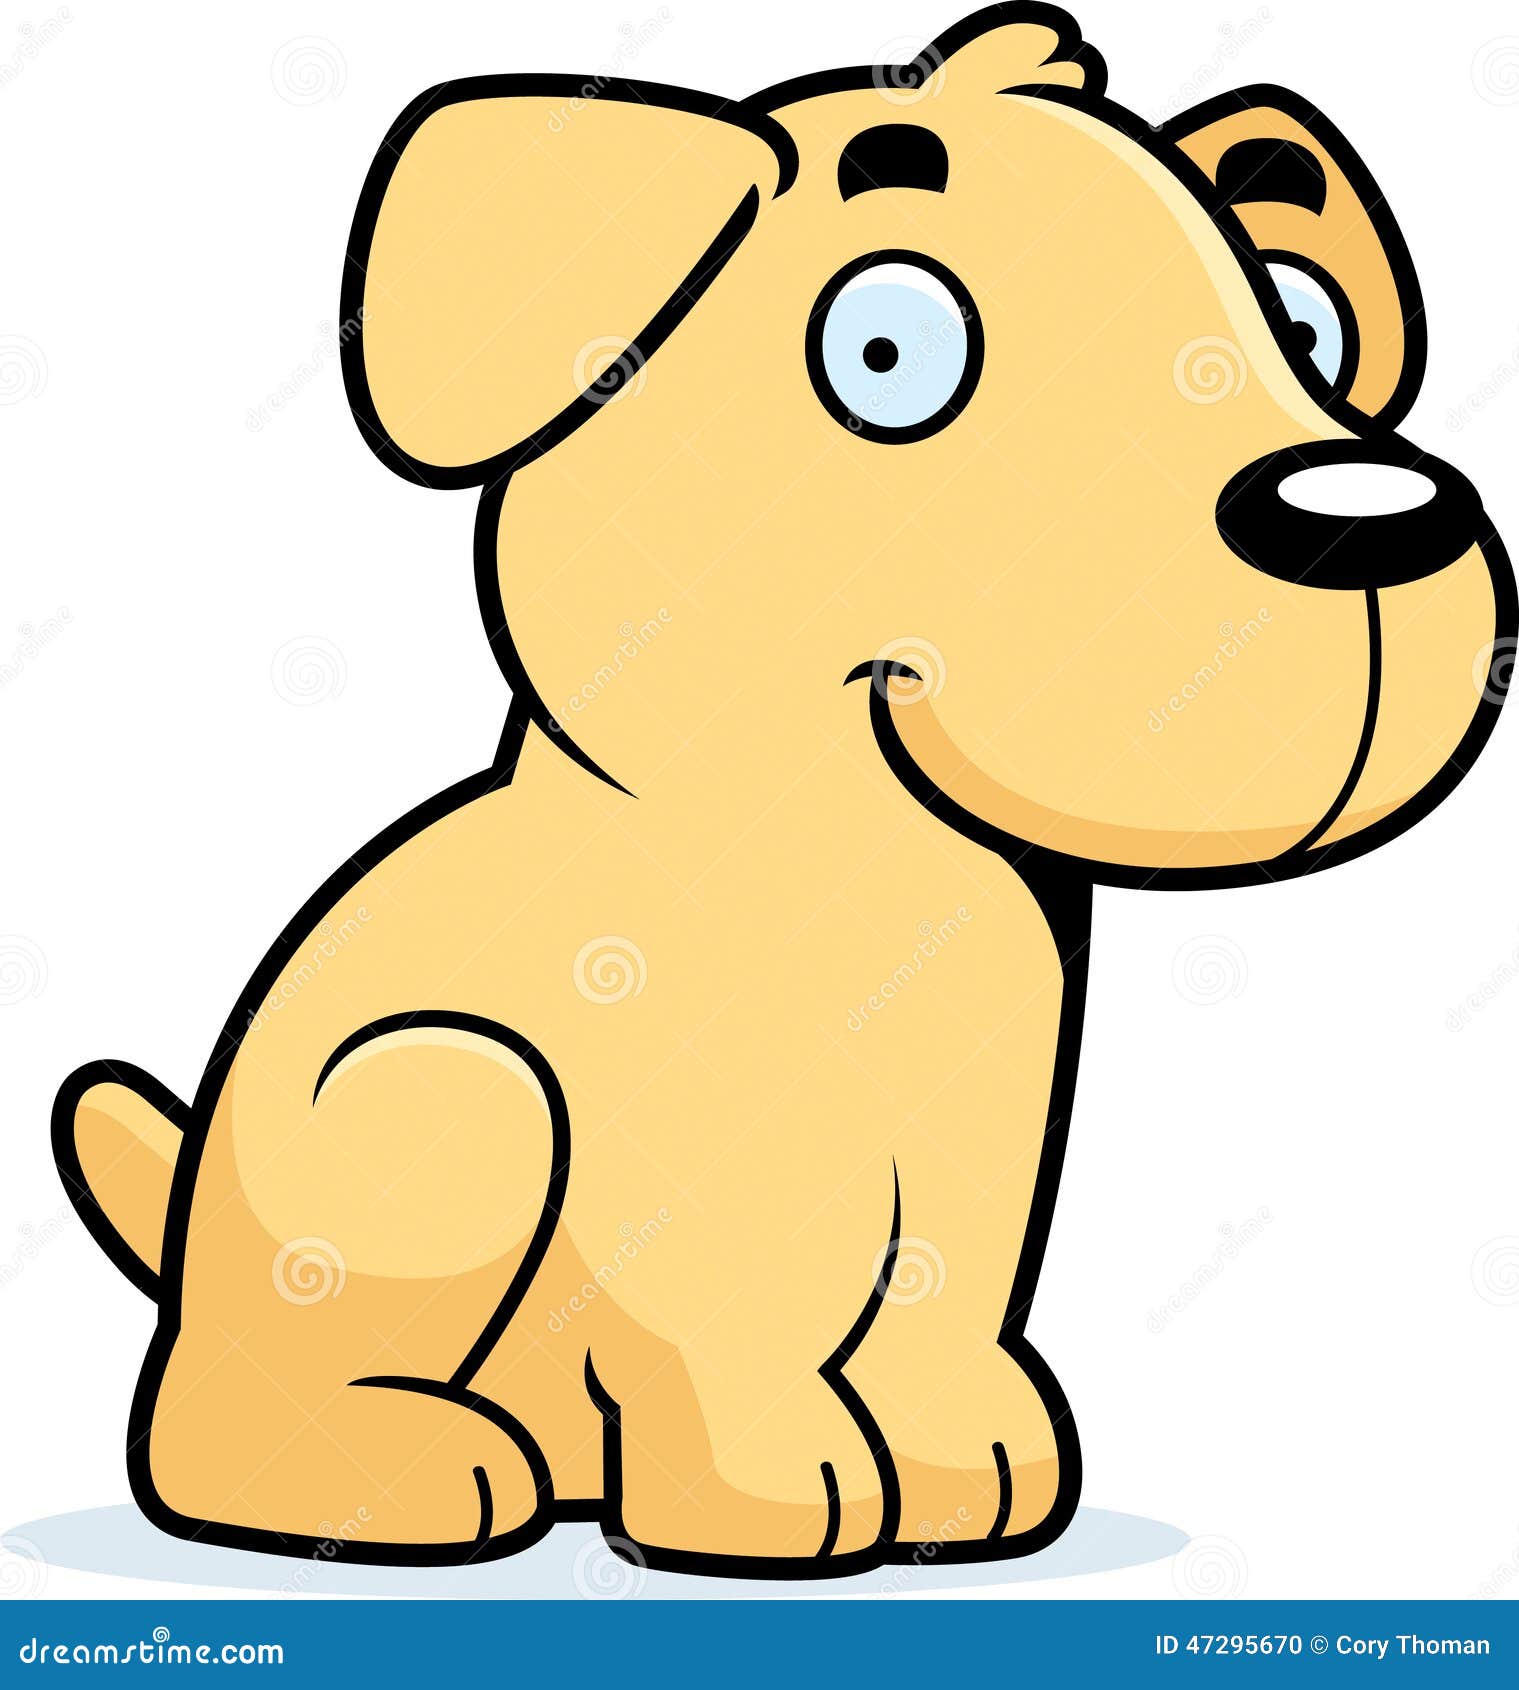 Cartoon Labrador Sitting Stock Vector - Image: 47295670